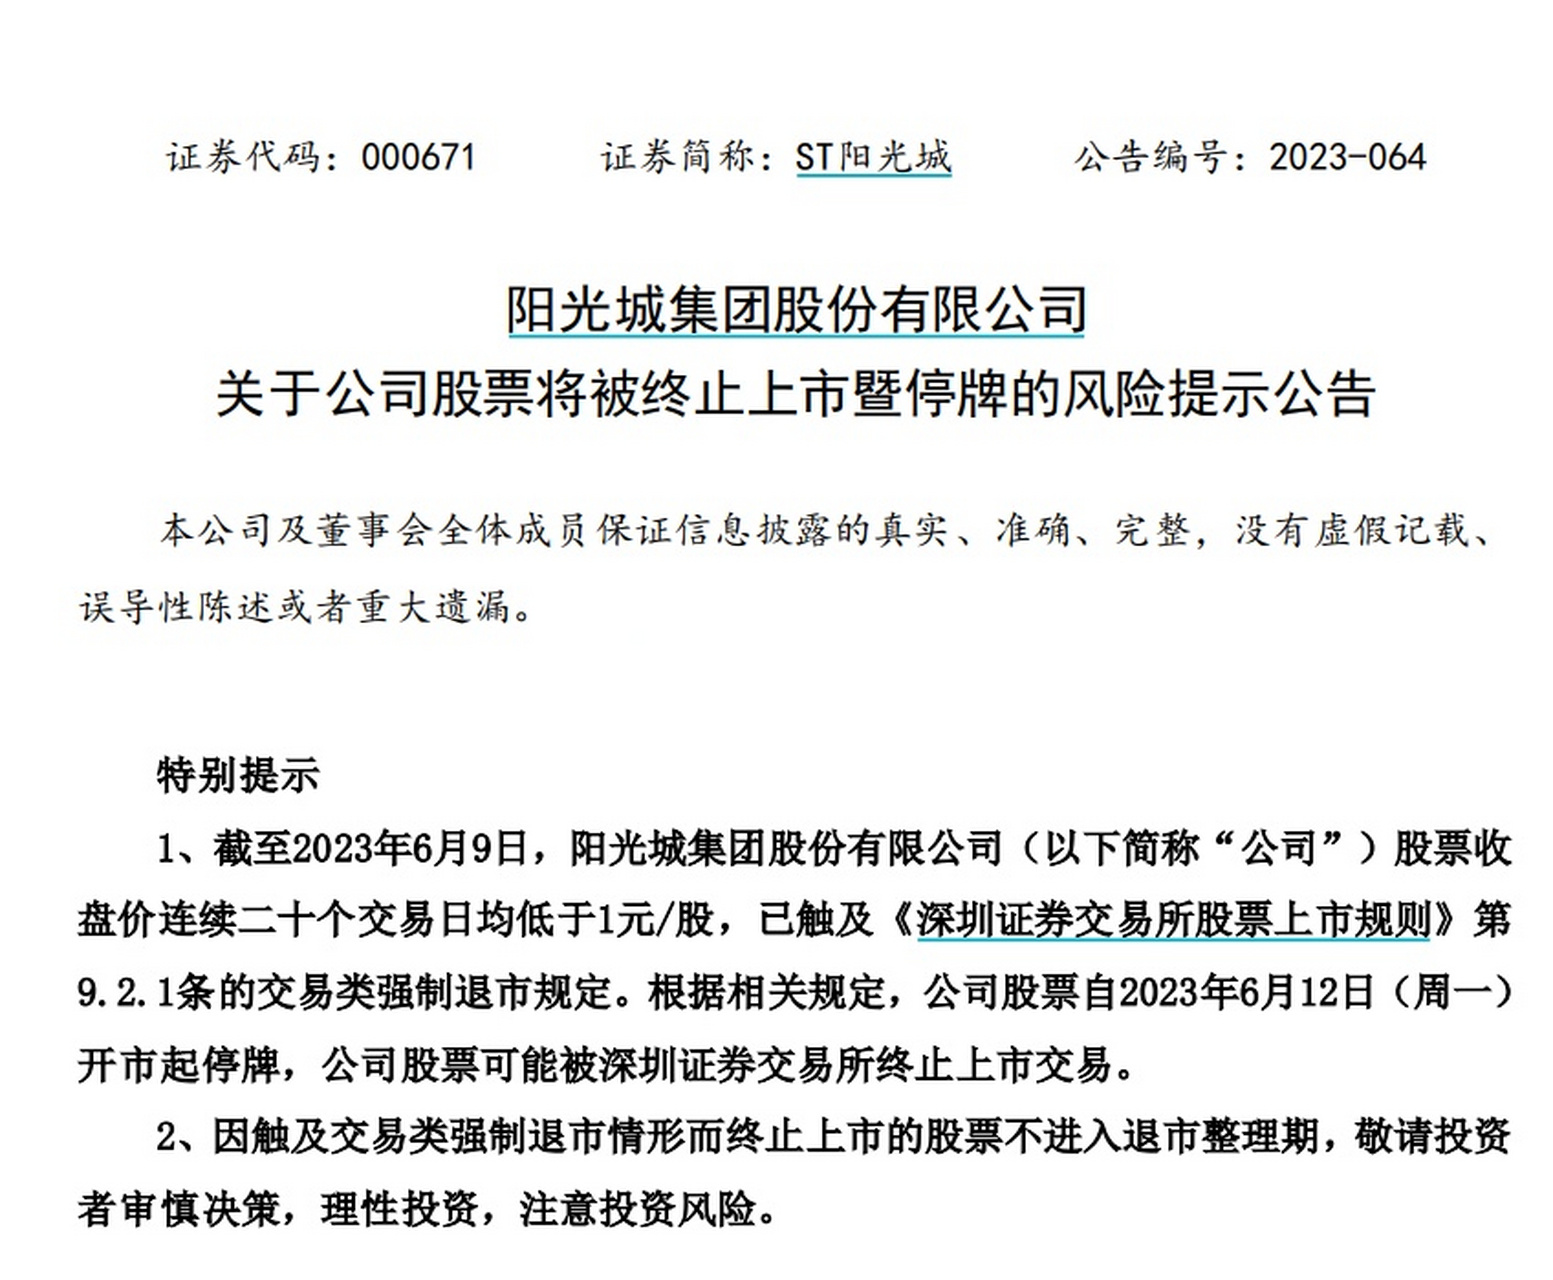 st阳光城(000671)公告,截至6月9日,公司股票收盘价连续二十个交易日均